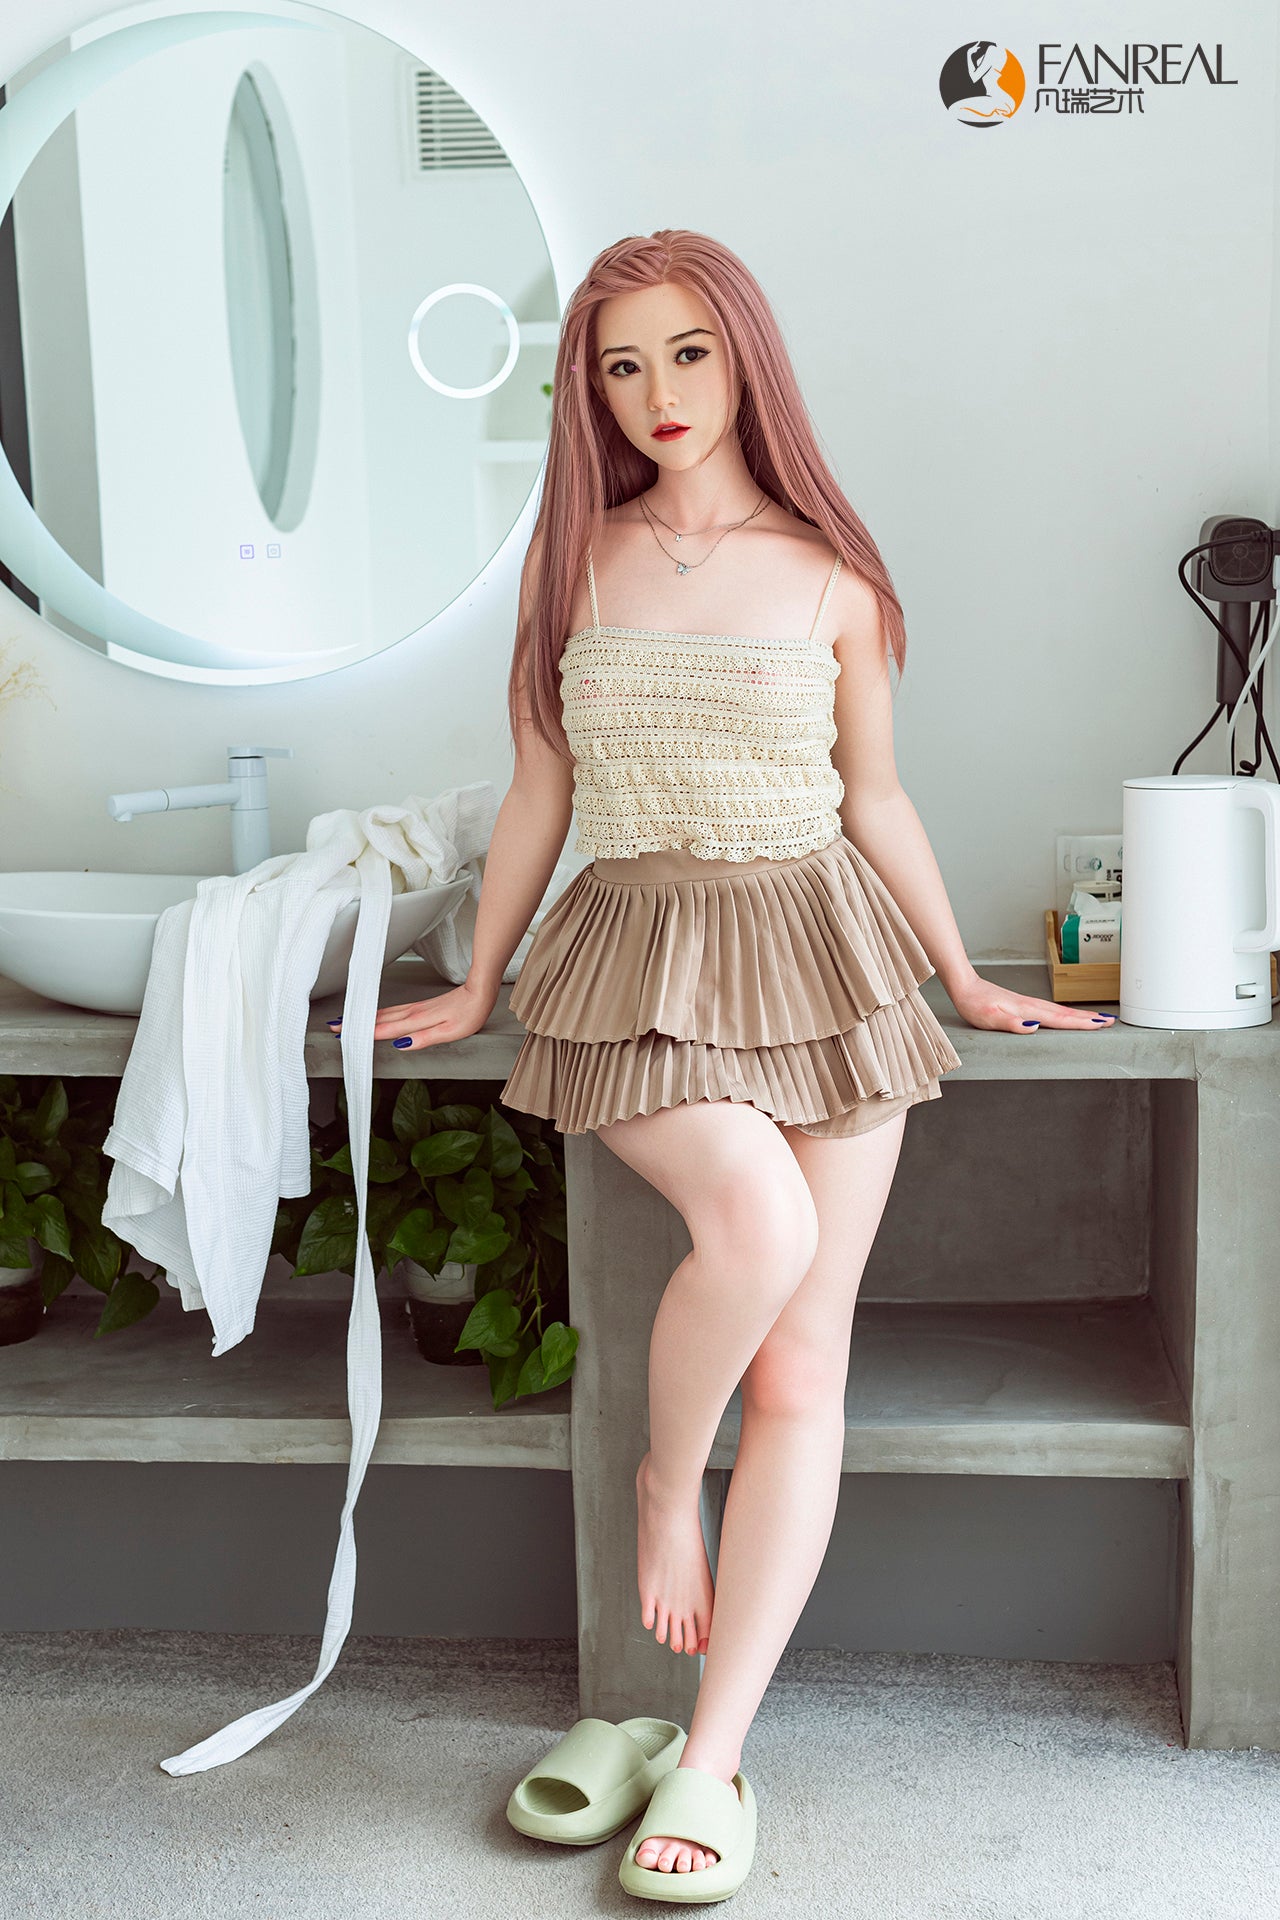 FANREAL DOLL 158 CM B Silicone - Qian | Buy Sex Dolls at DOLLS ACTUALLY